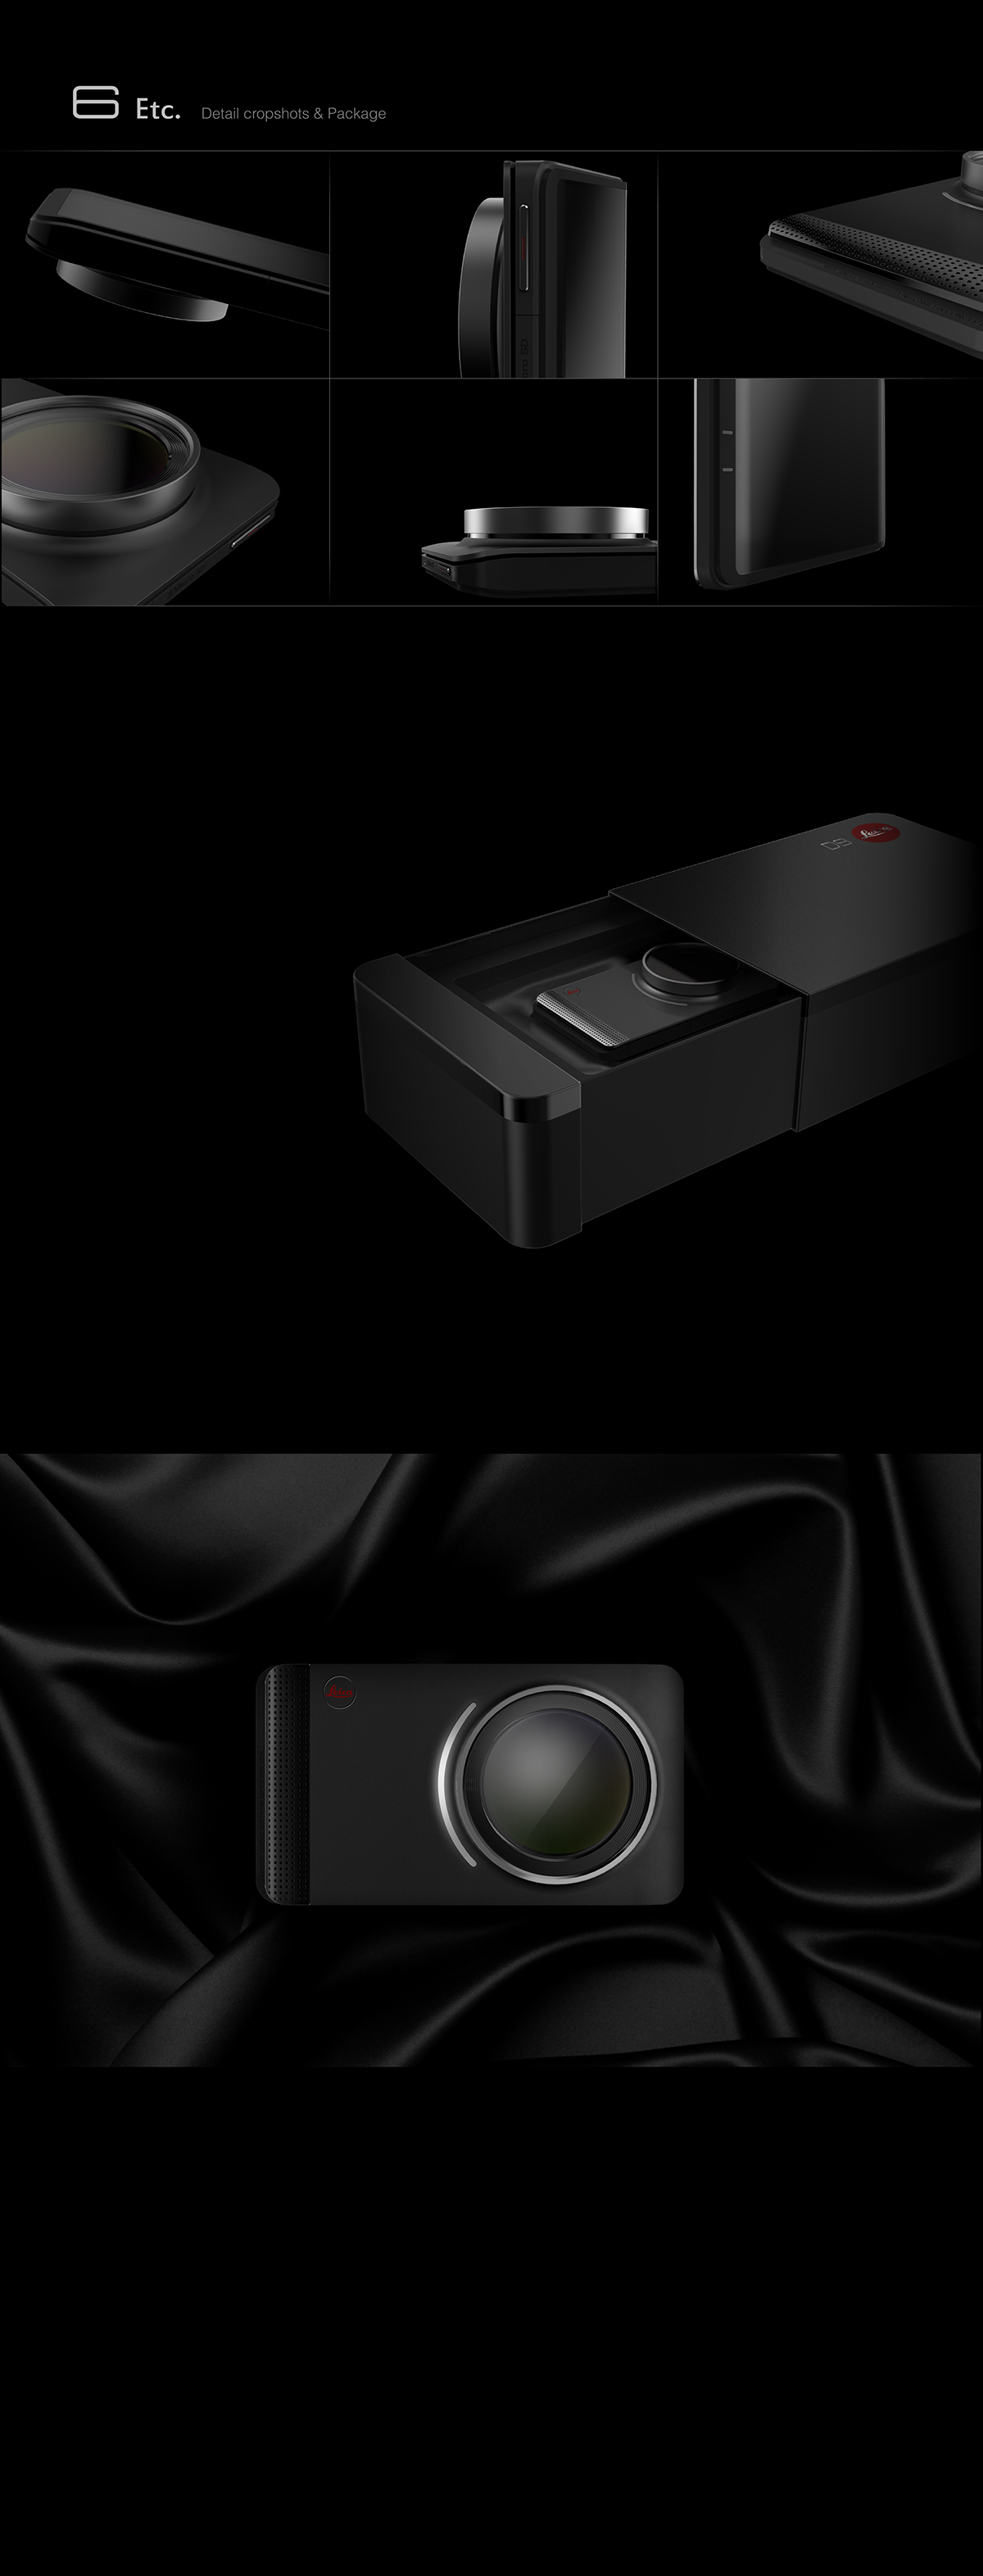 dashcam blackbox camera compact camera product Leica concept design